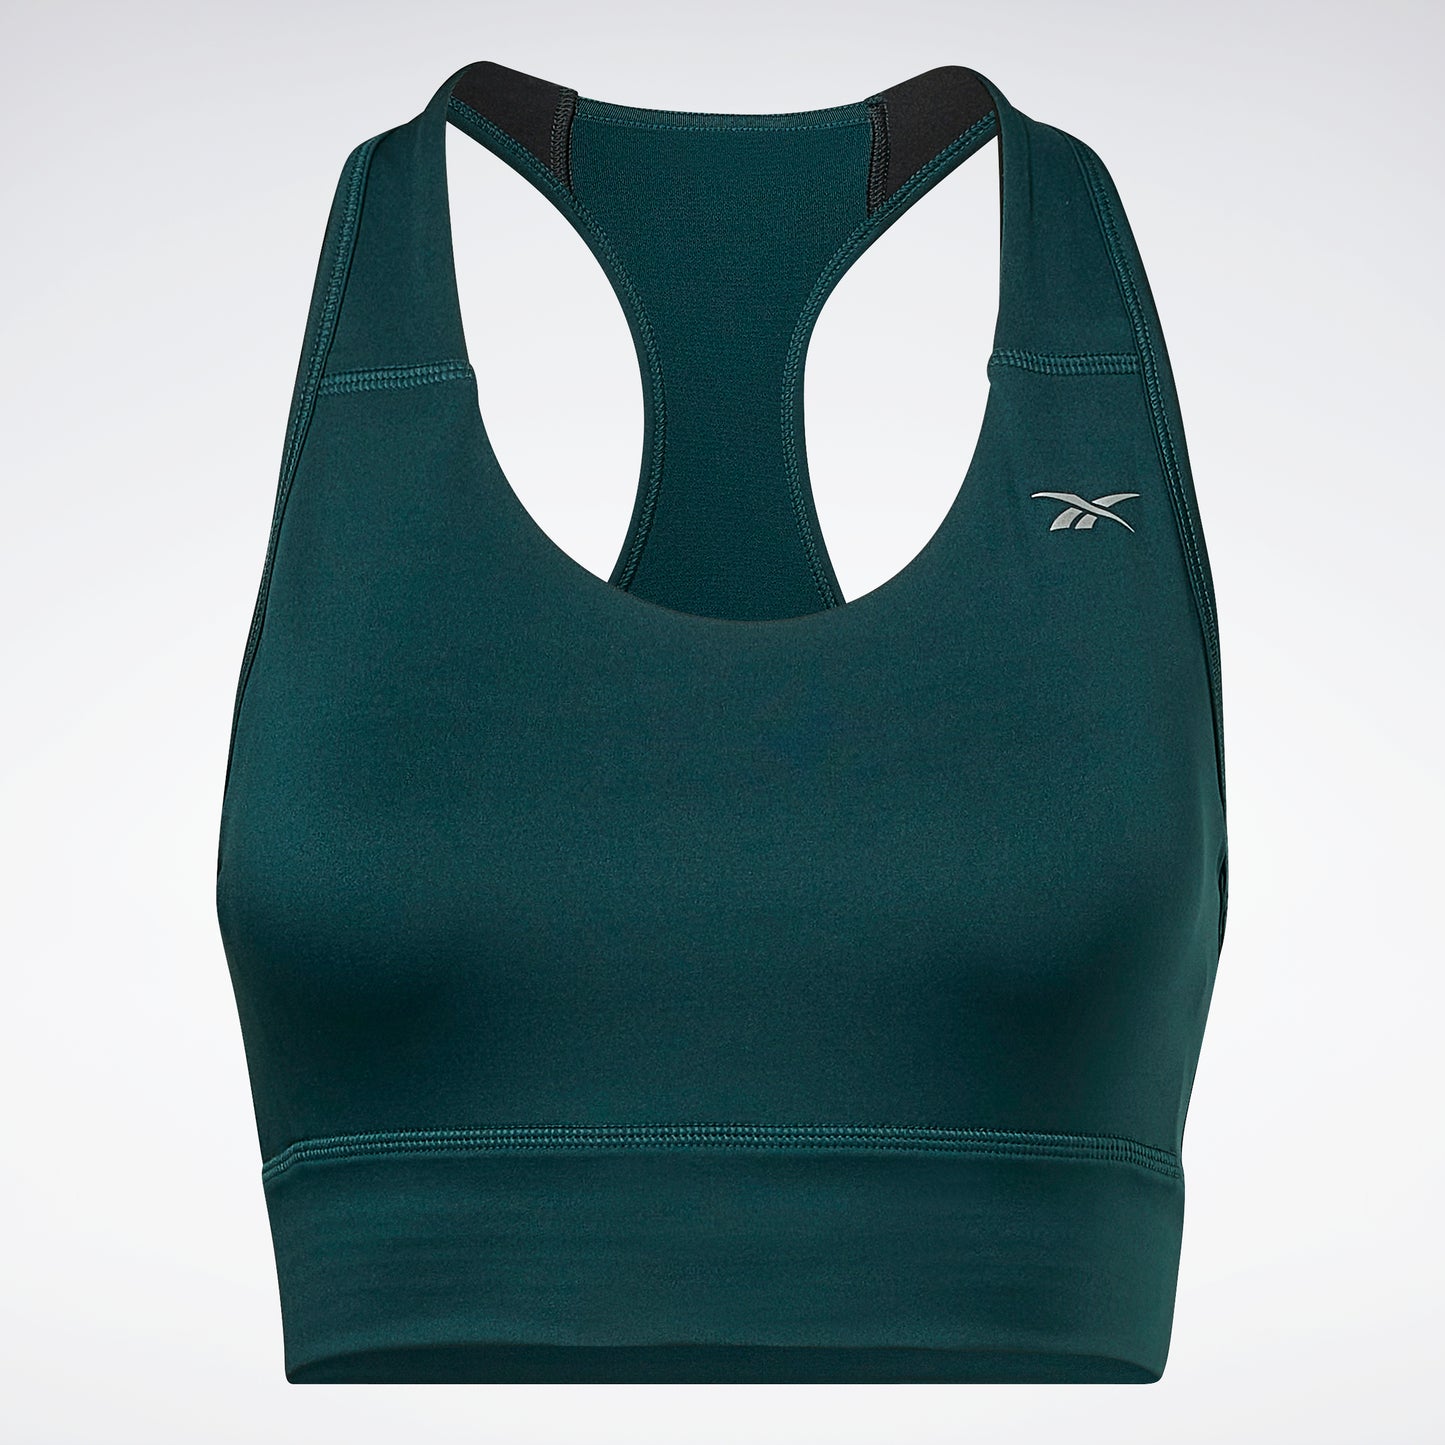 Stylish Emerald Green Sports Bra for Active Women